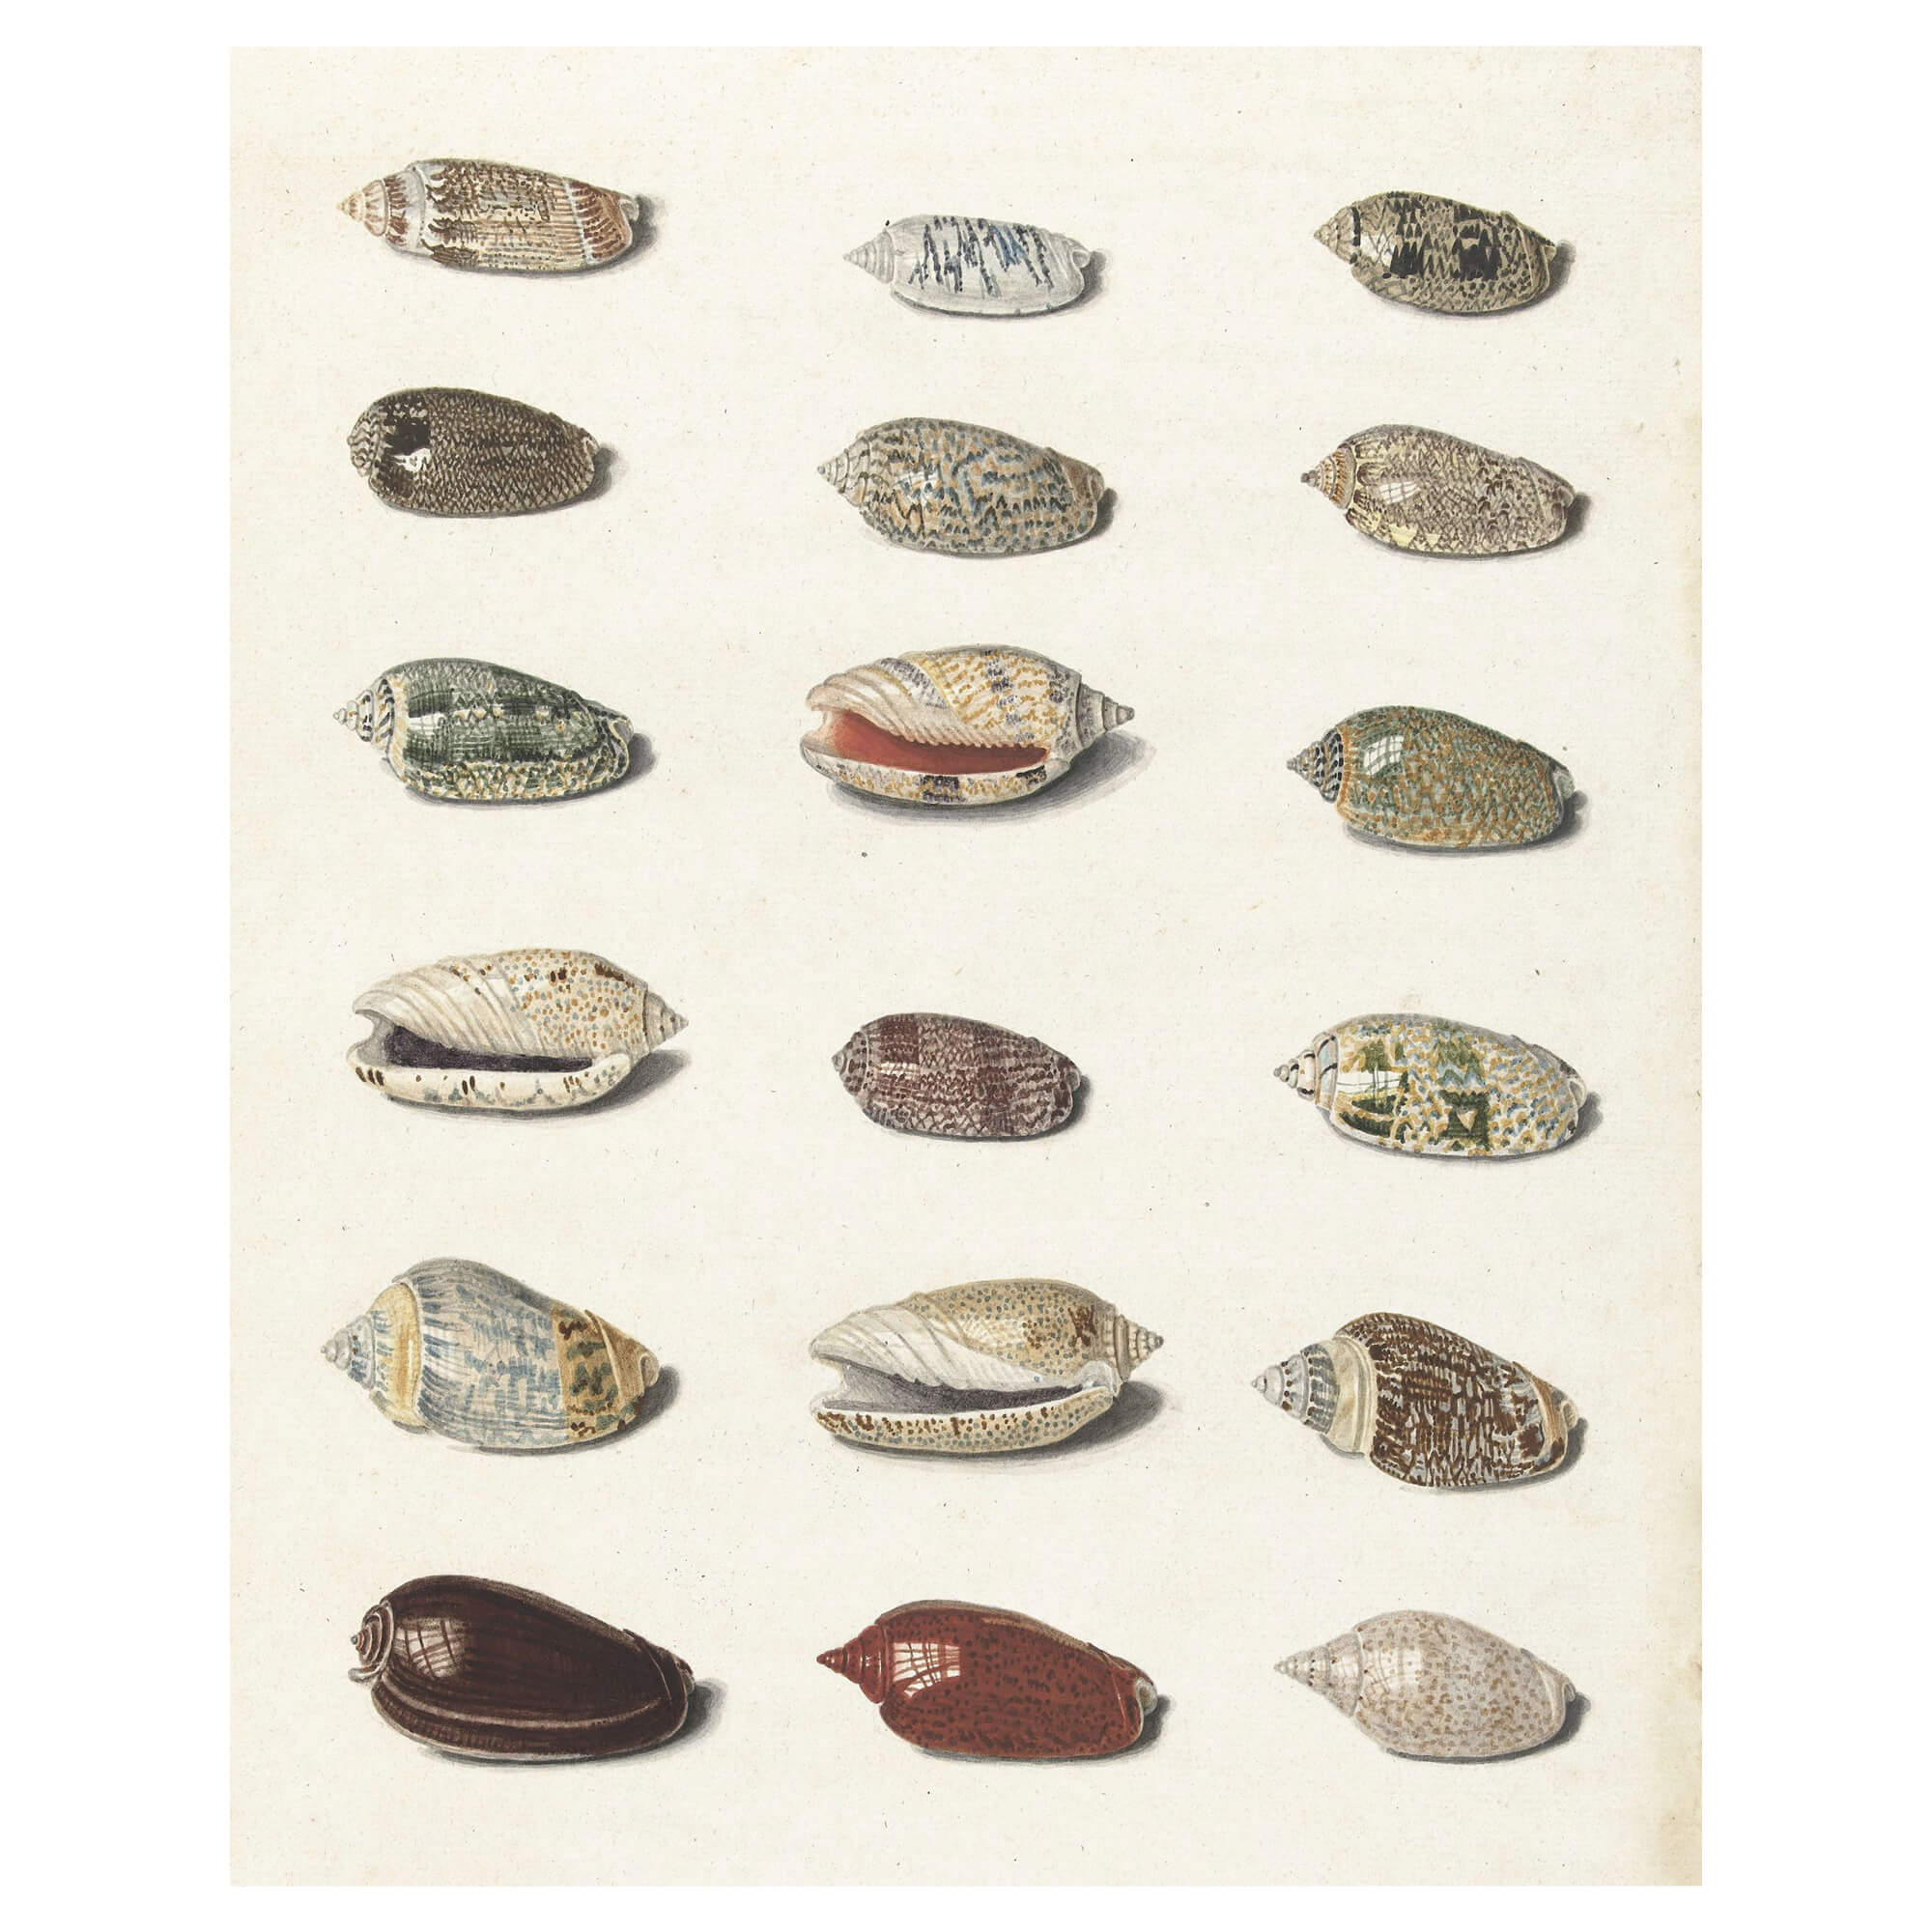 Shiny seashells with various patterns